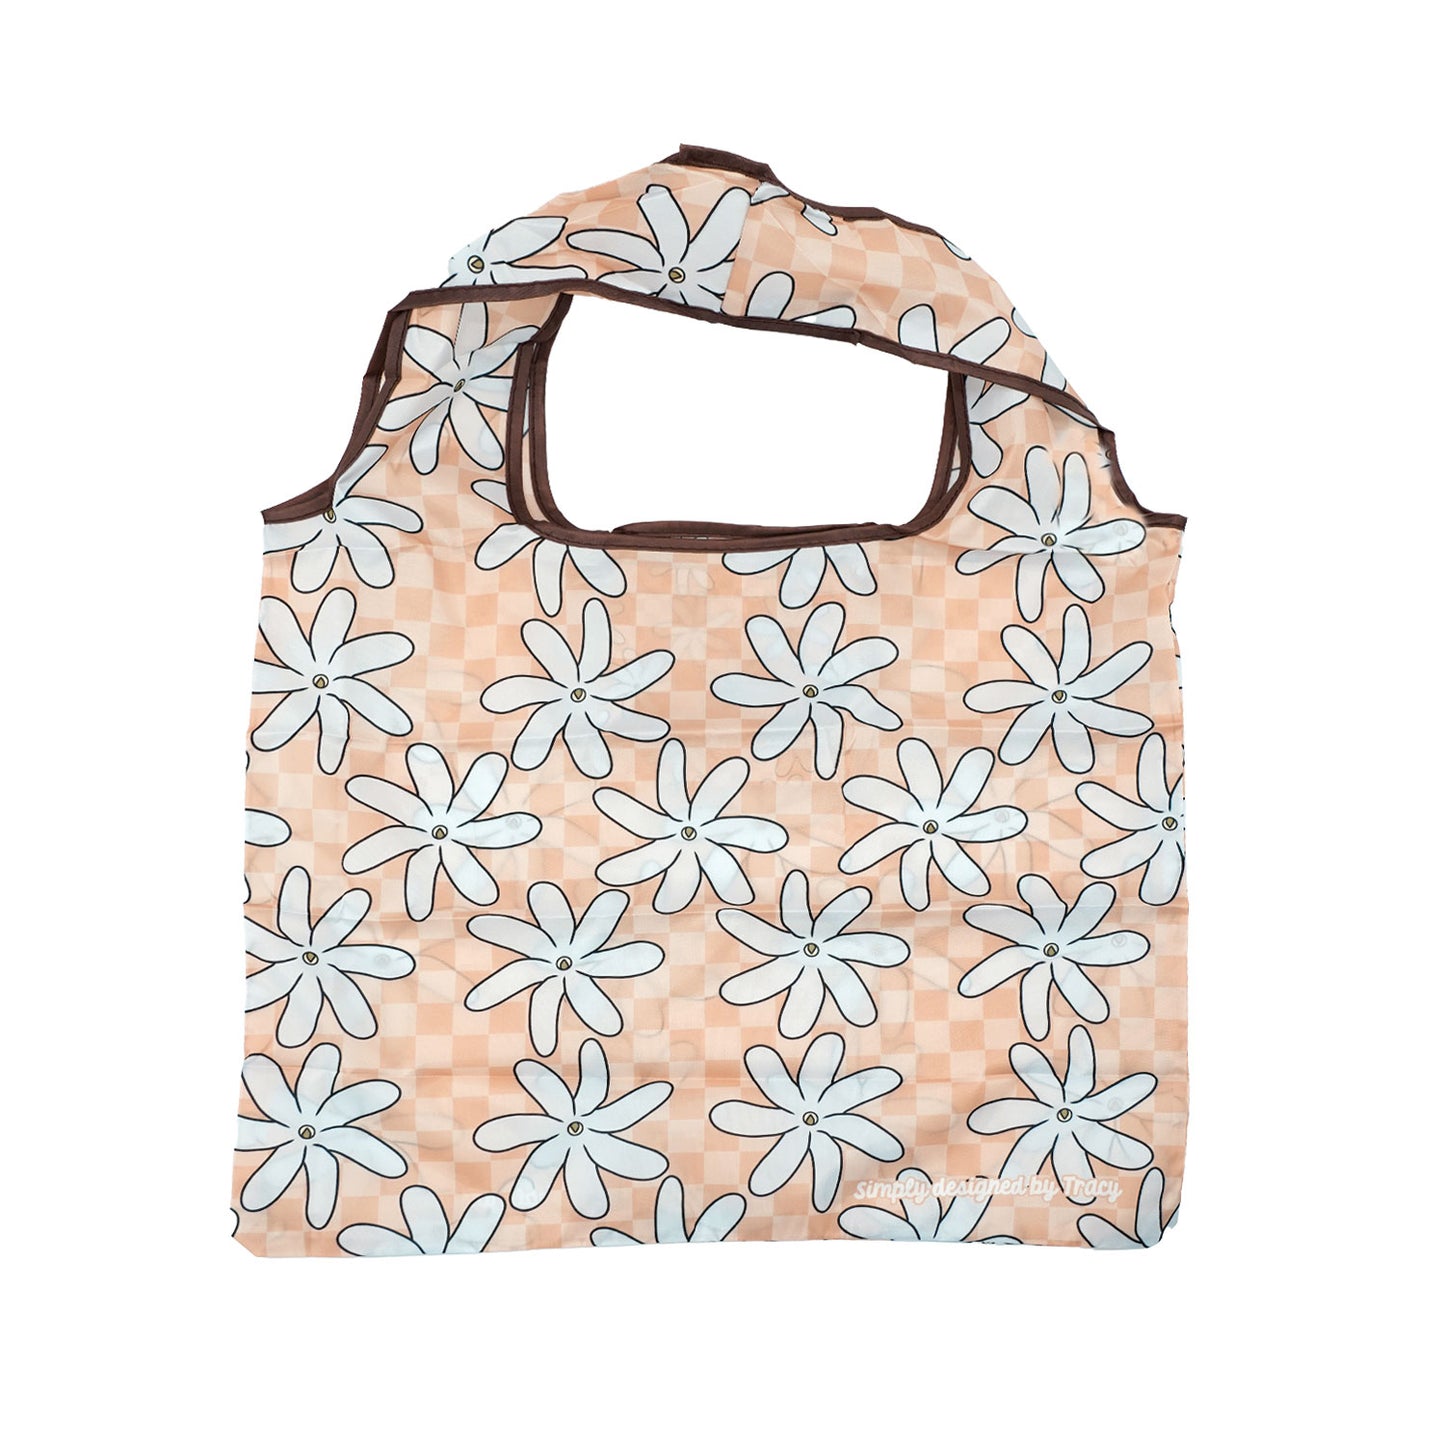 Reusable Foldable Shopping Bag - Checkers & Tiare Flower